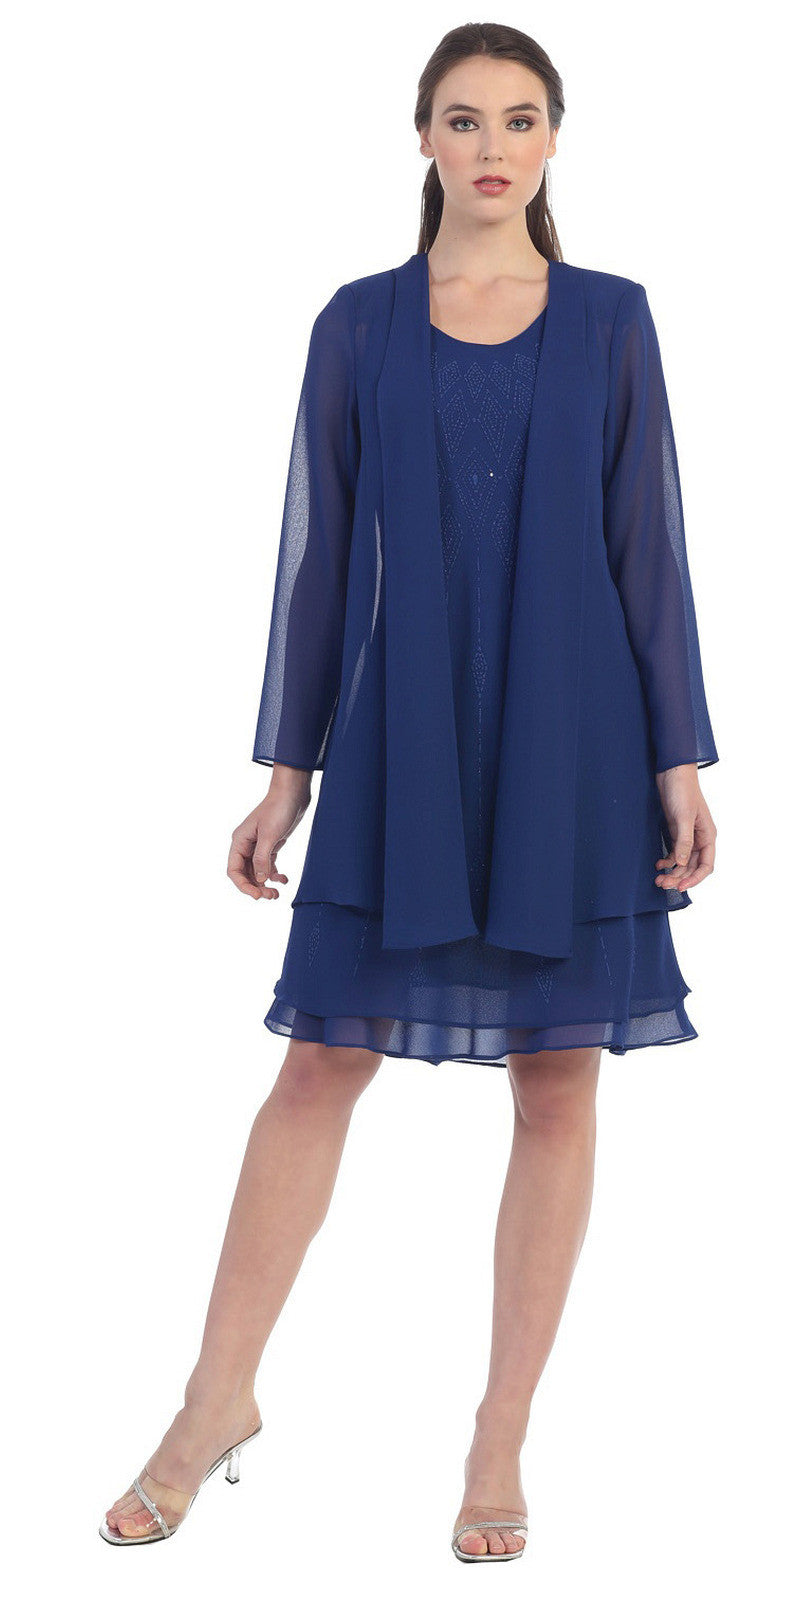 Sally Fashion 8694 Flowy Chiffon Royal Blue Dress Knee Length Long Sleeve Cardigan